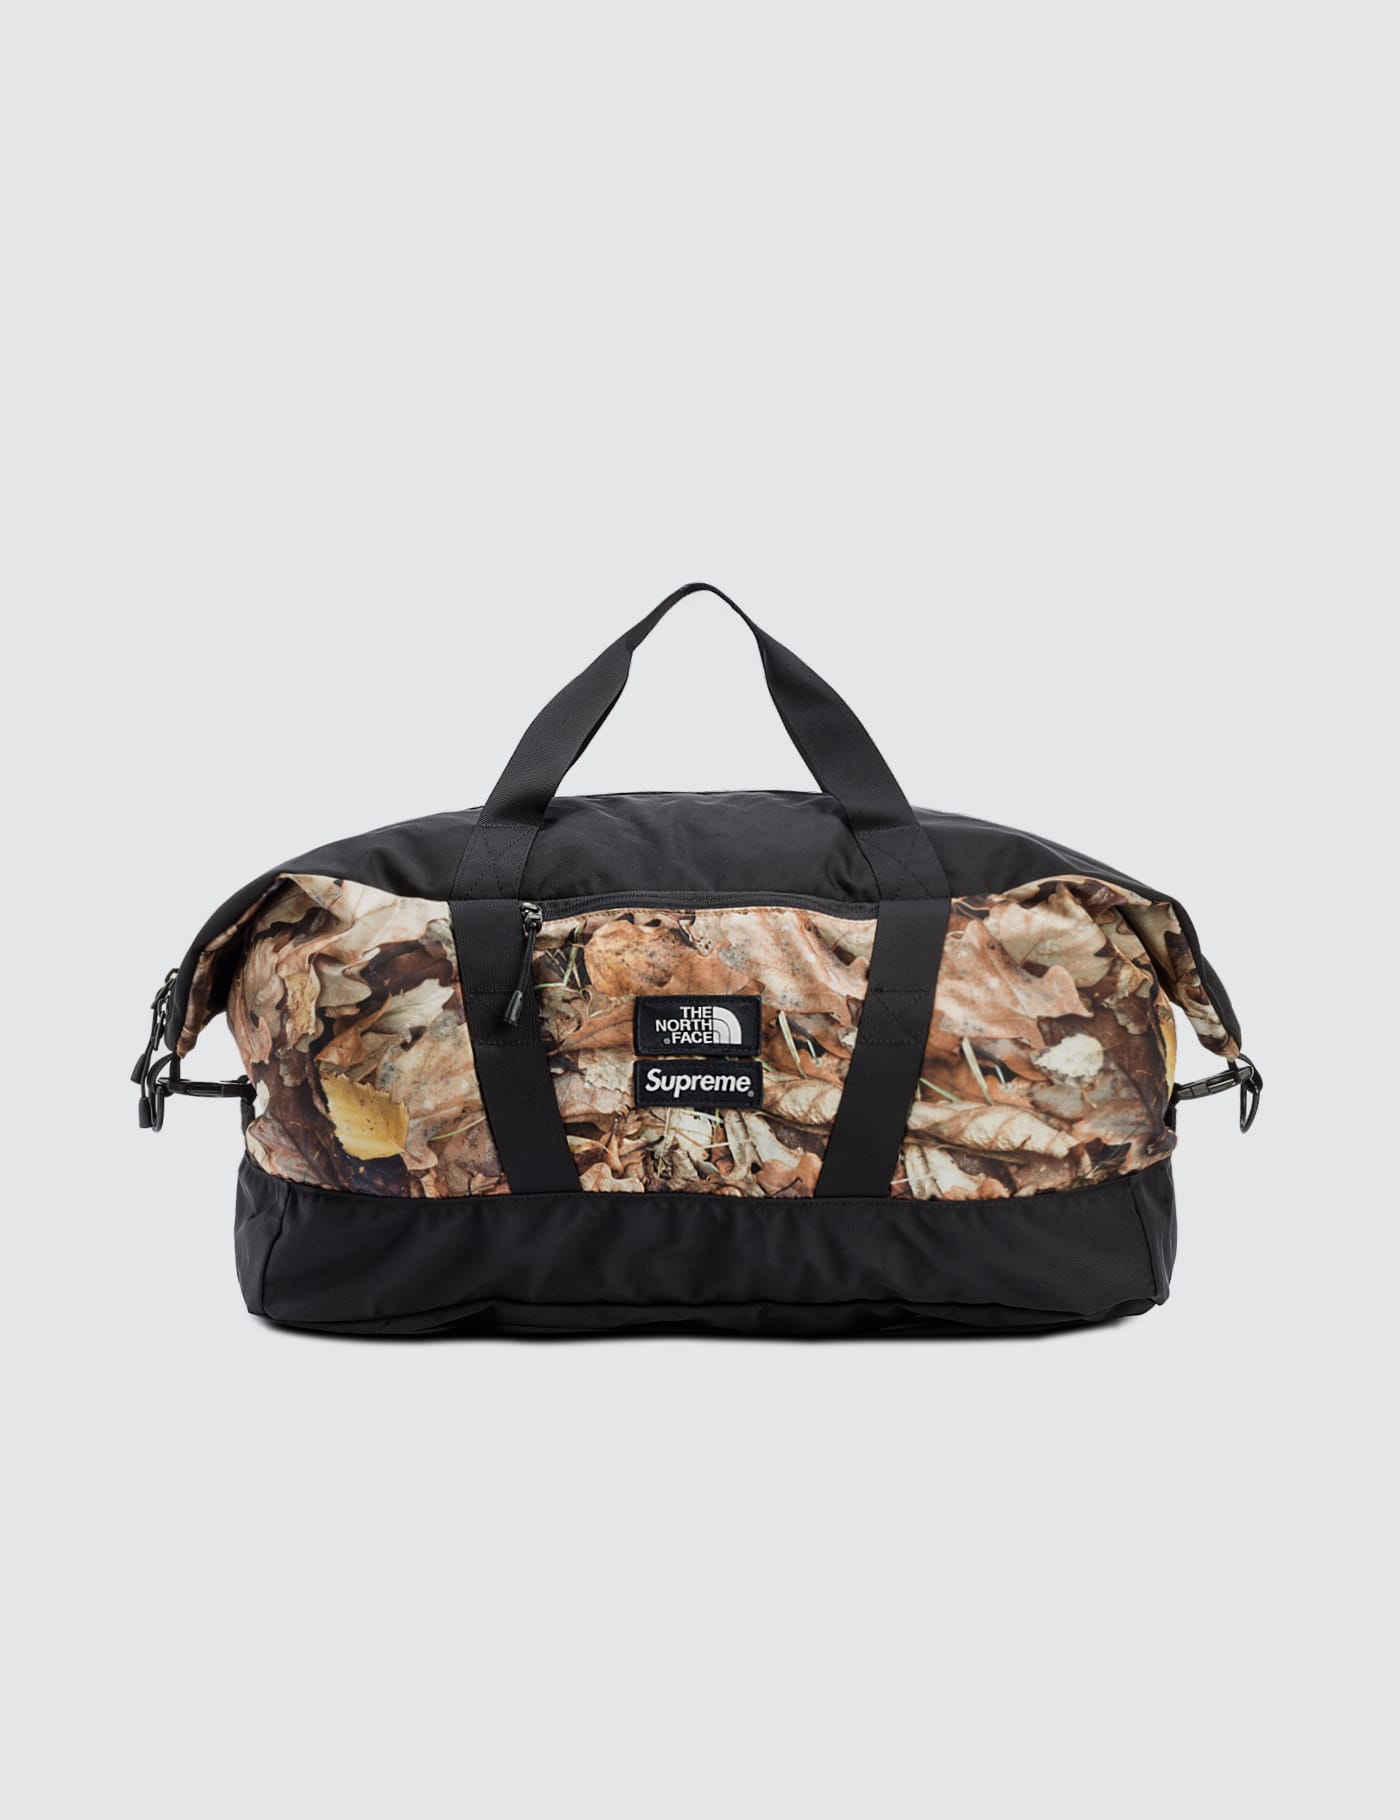 Supreme - The North Face X Supreme Duffle Bag 